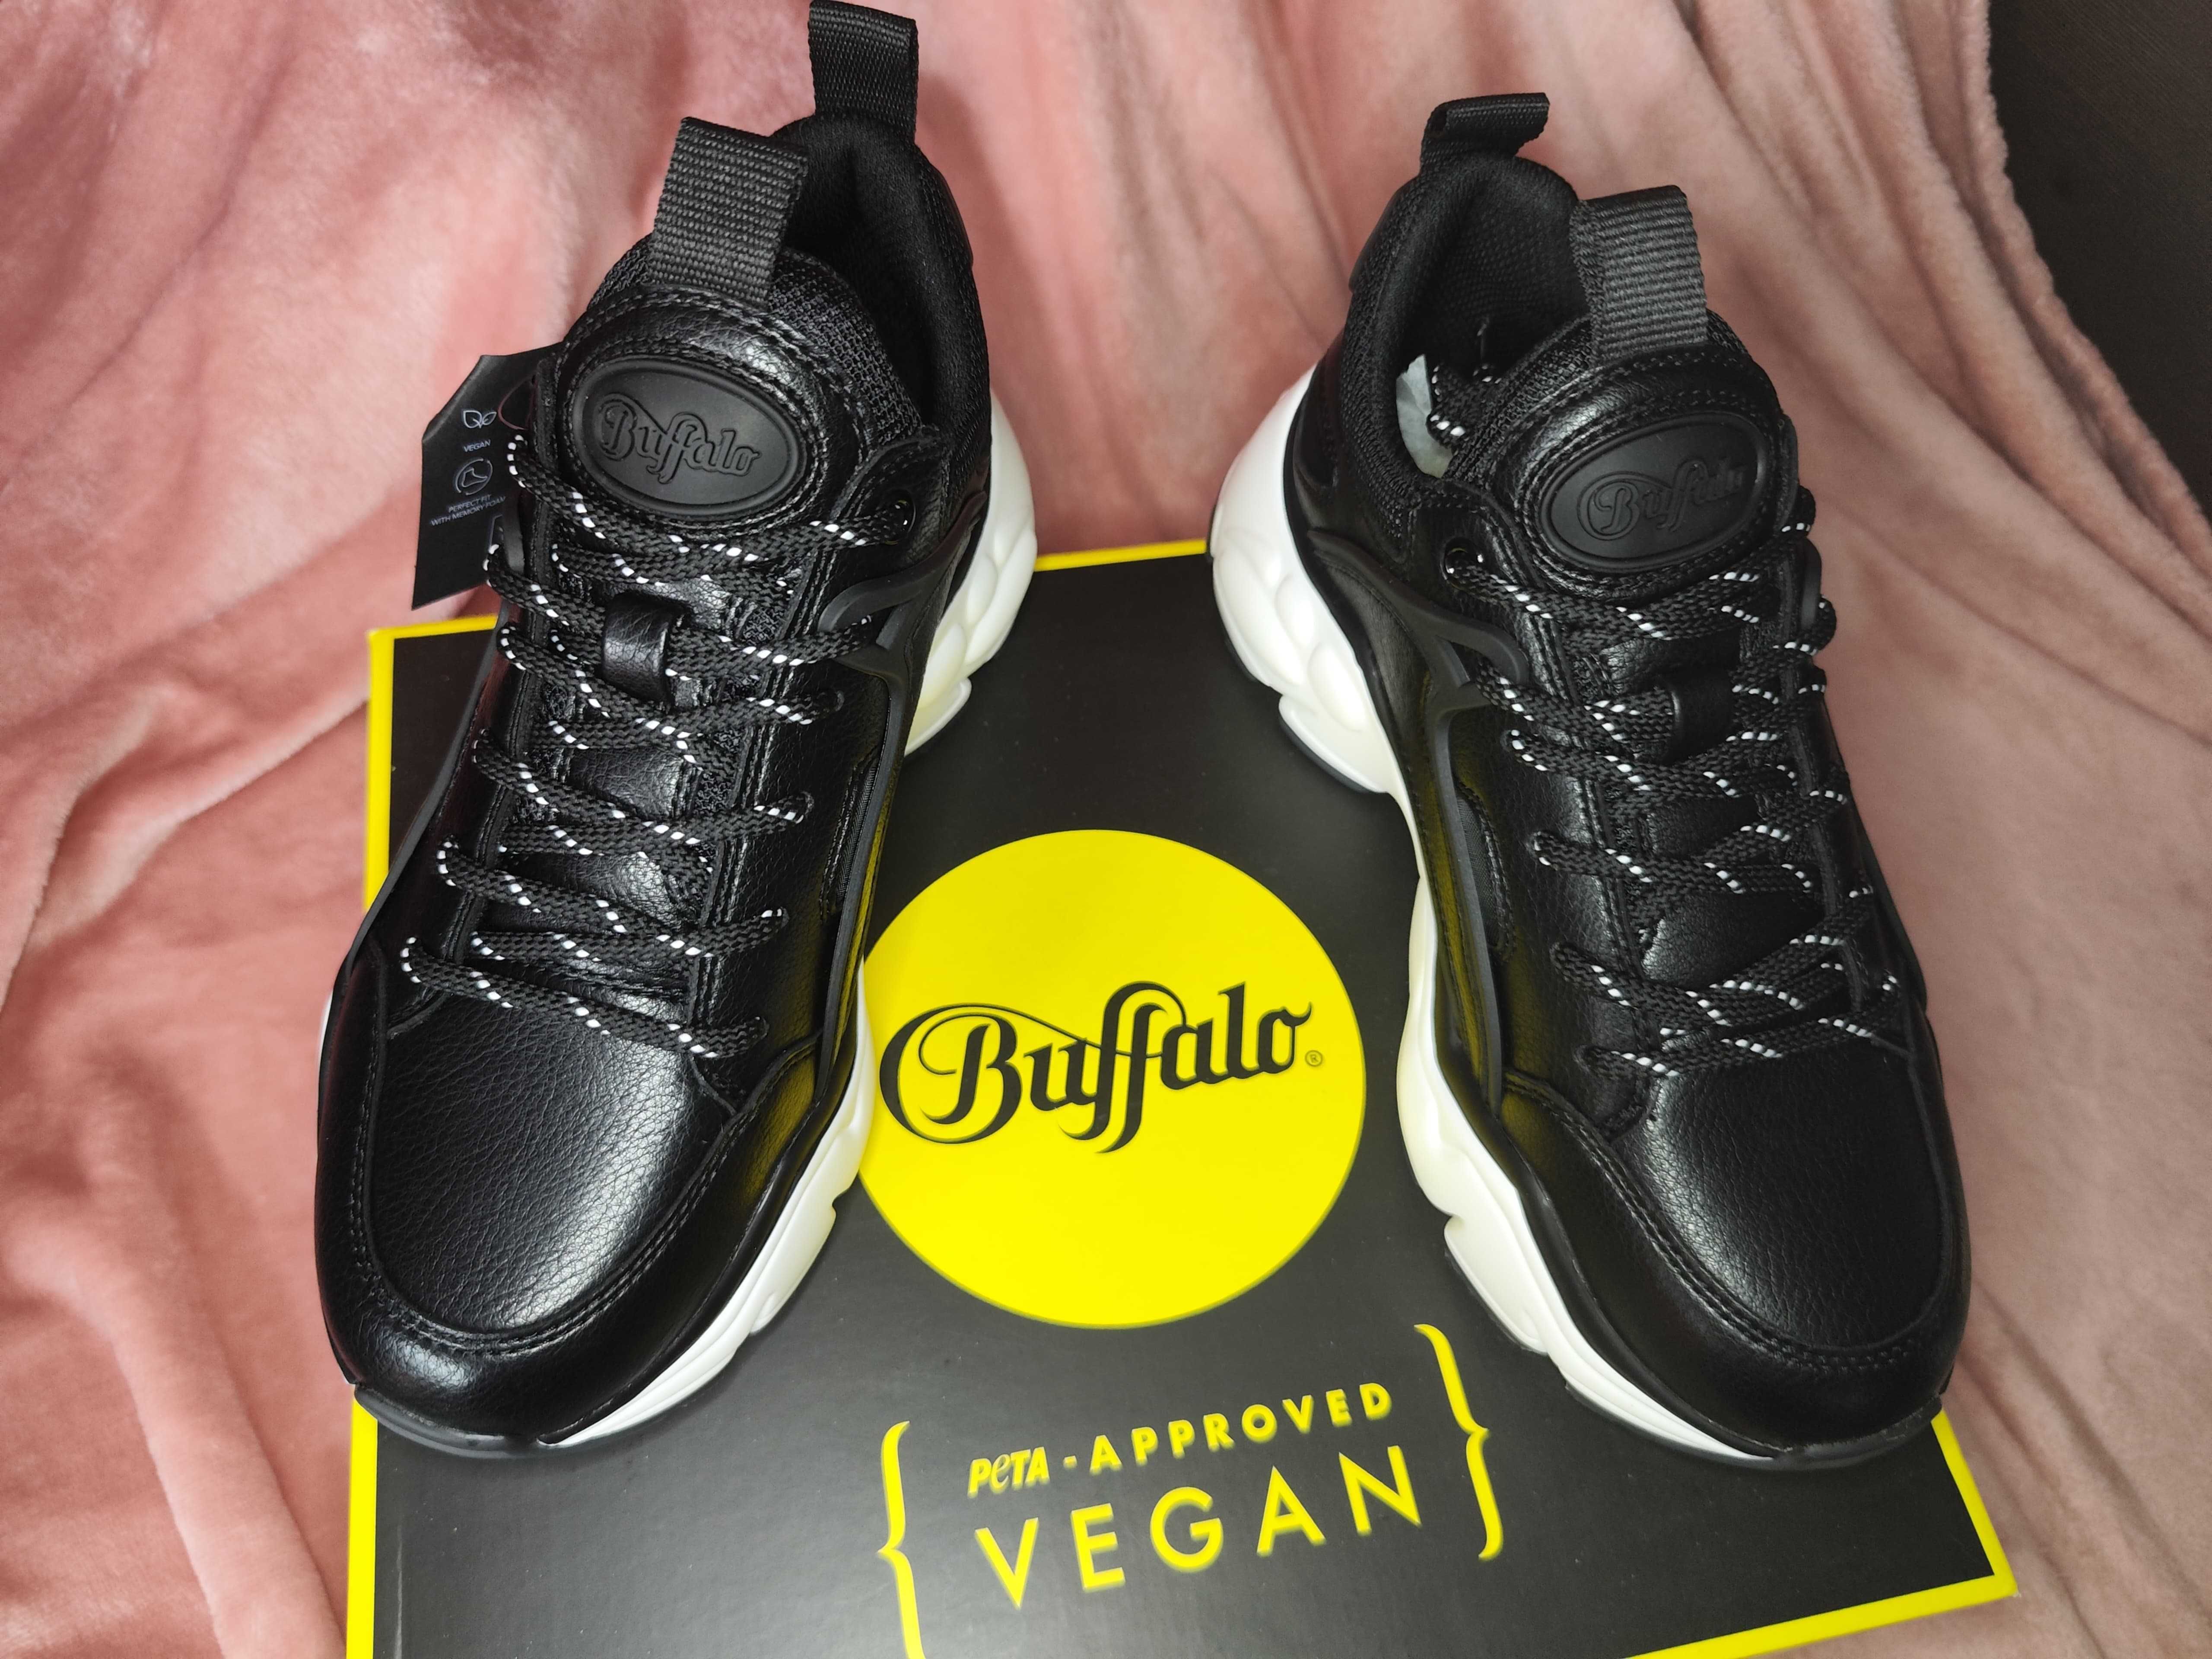 Buffalo Sneakersy Binary buty adidasy platforma obcas botki vegan 39